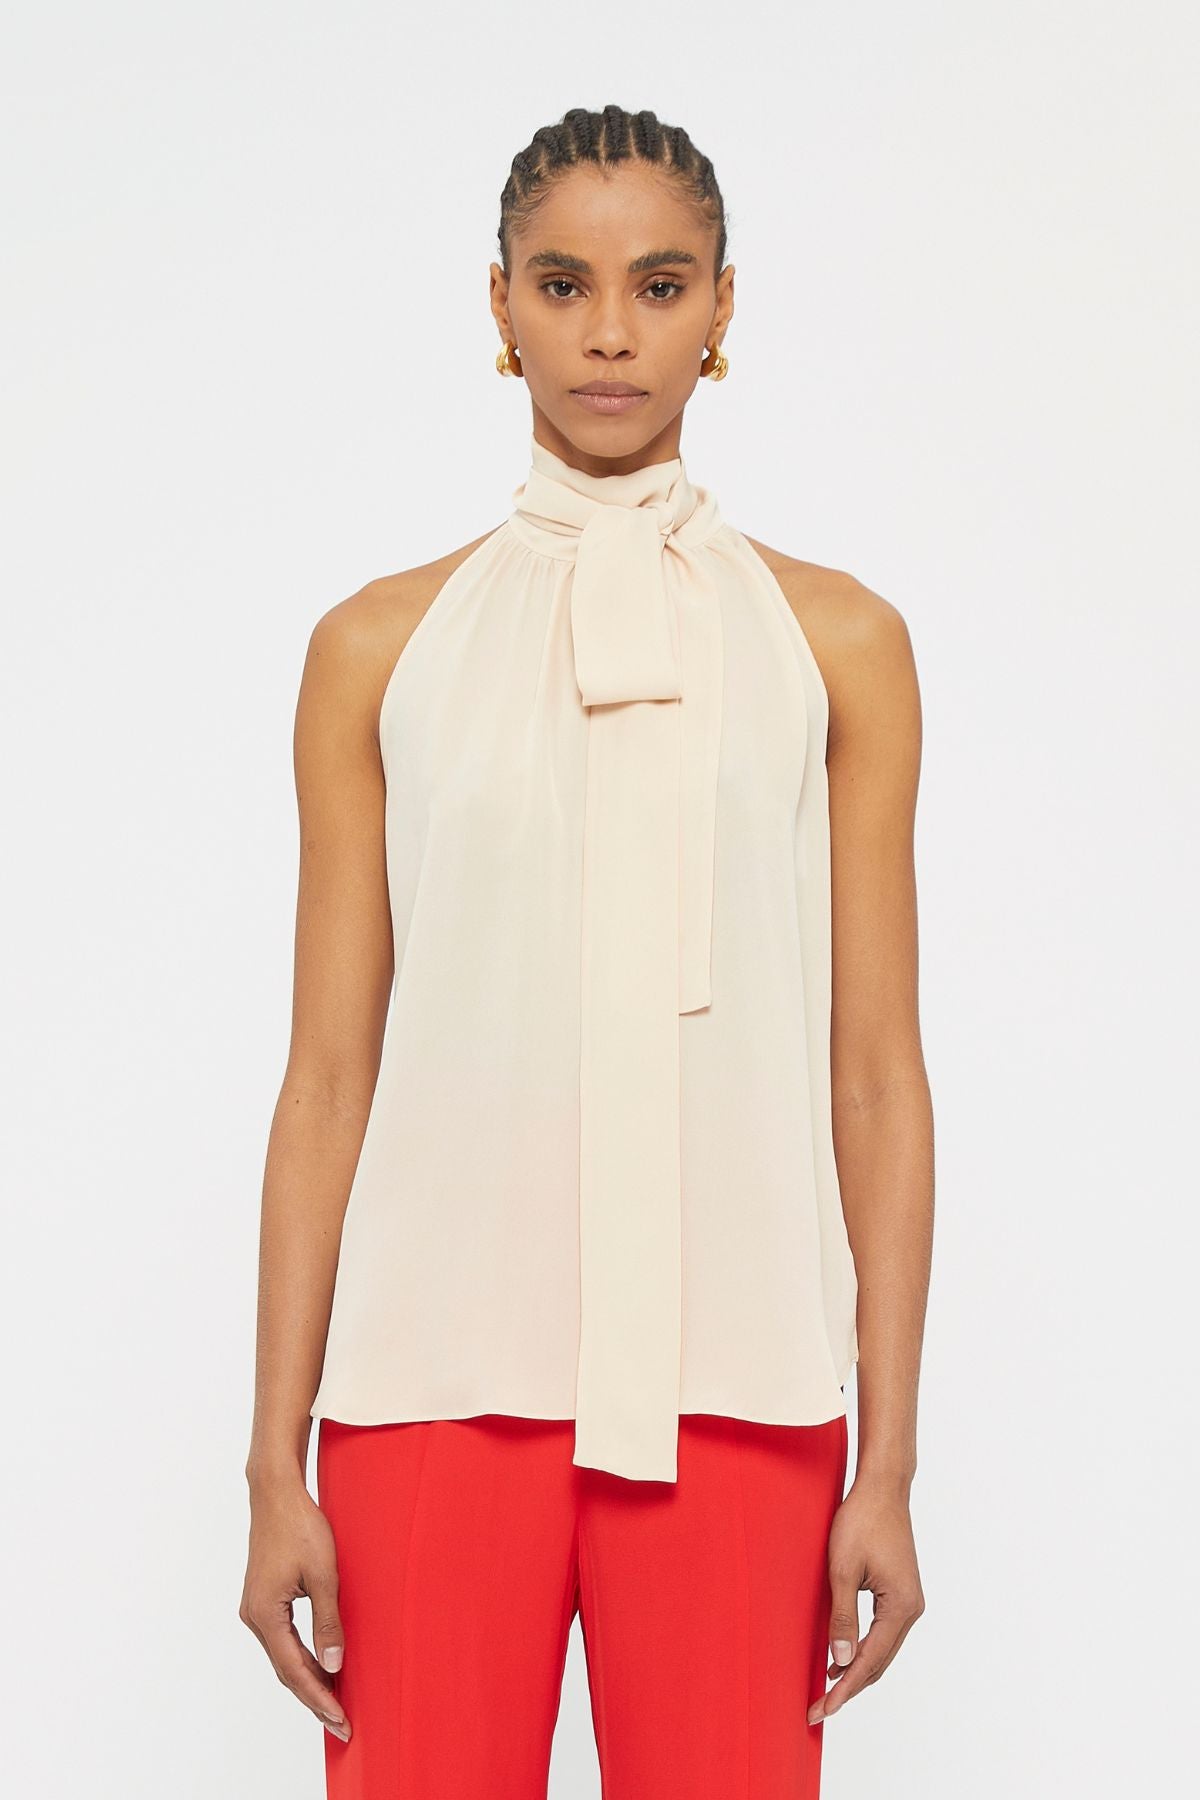 Australian women's designer Grace Tie Neck Top crafted from cream silk